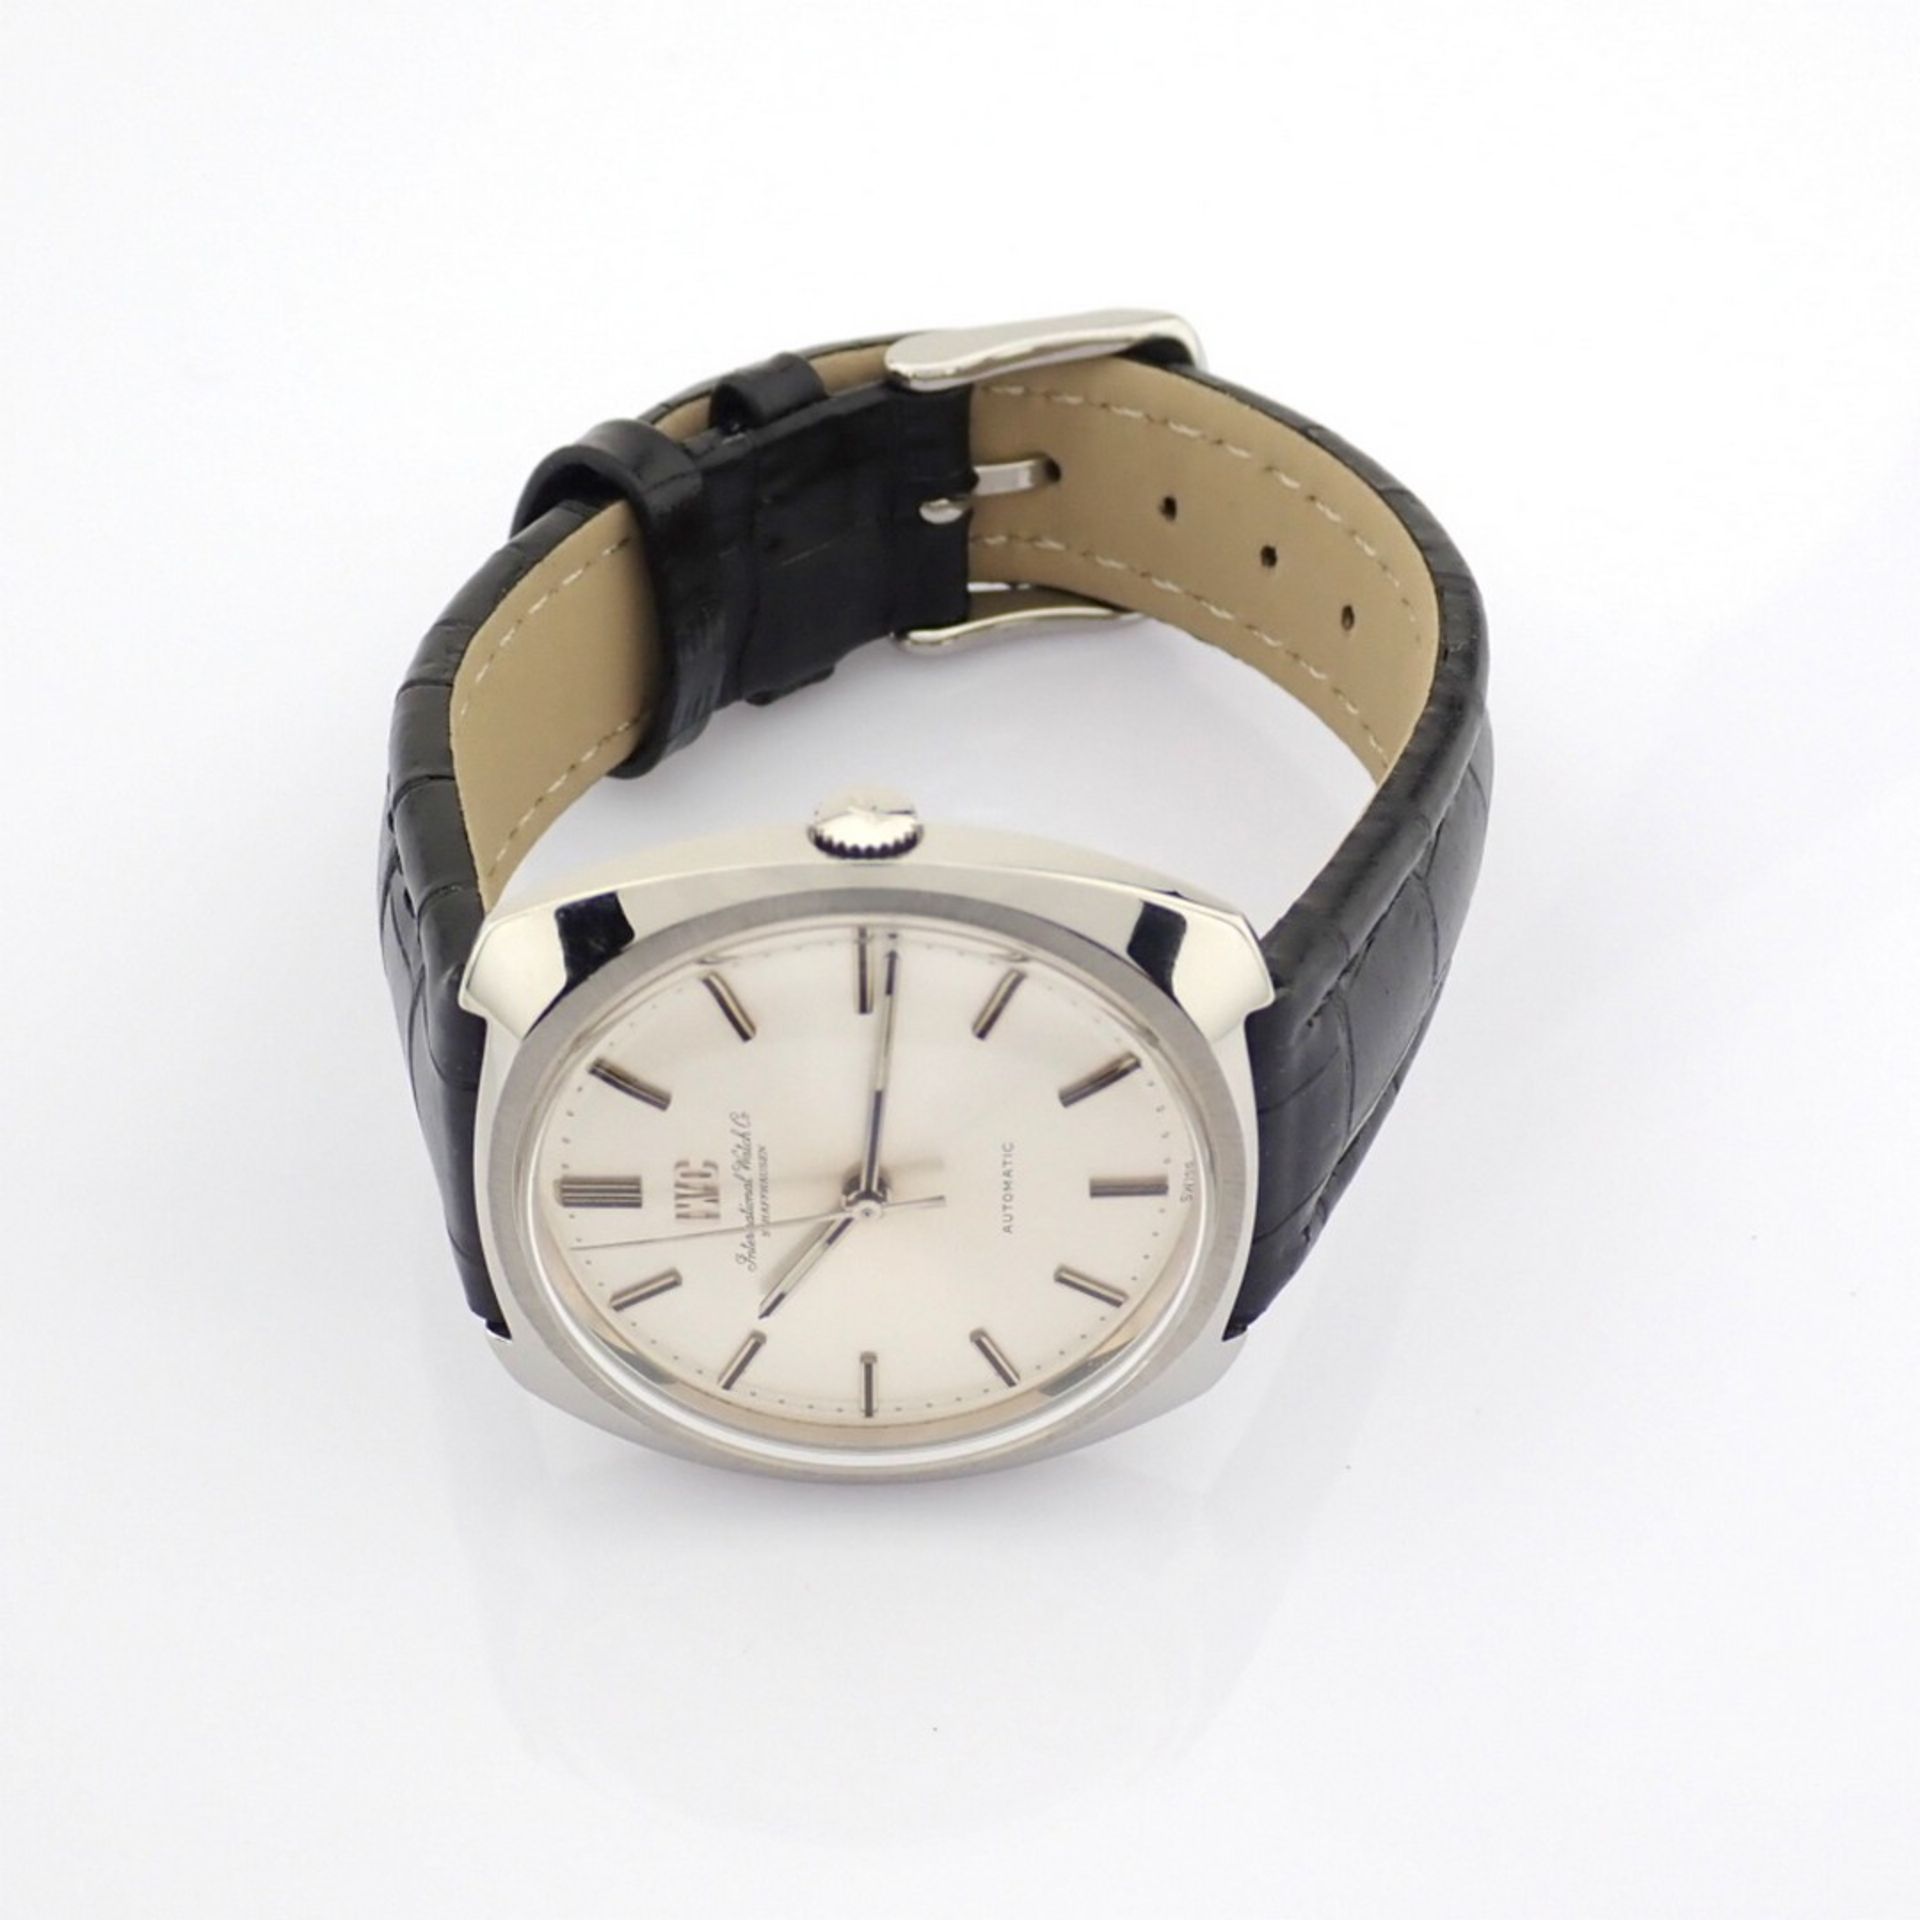 IWC / Pellaton (Rare) 1970s Caliber C854 - Gentlmen's Steel Wrist Watch - Image 7 of 15